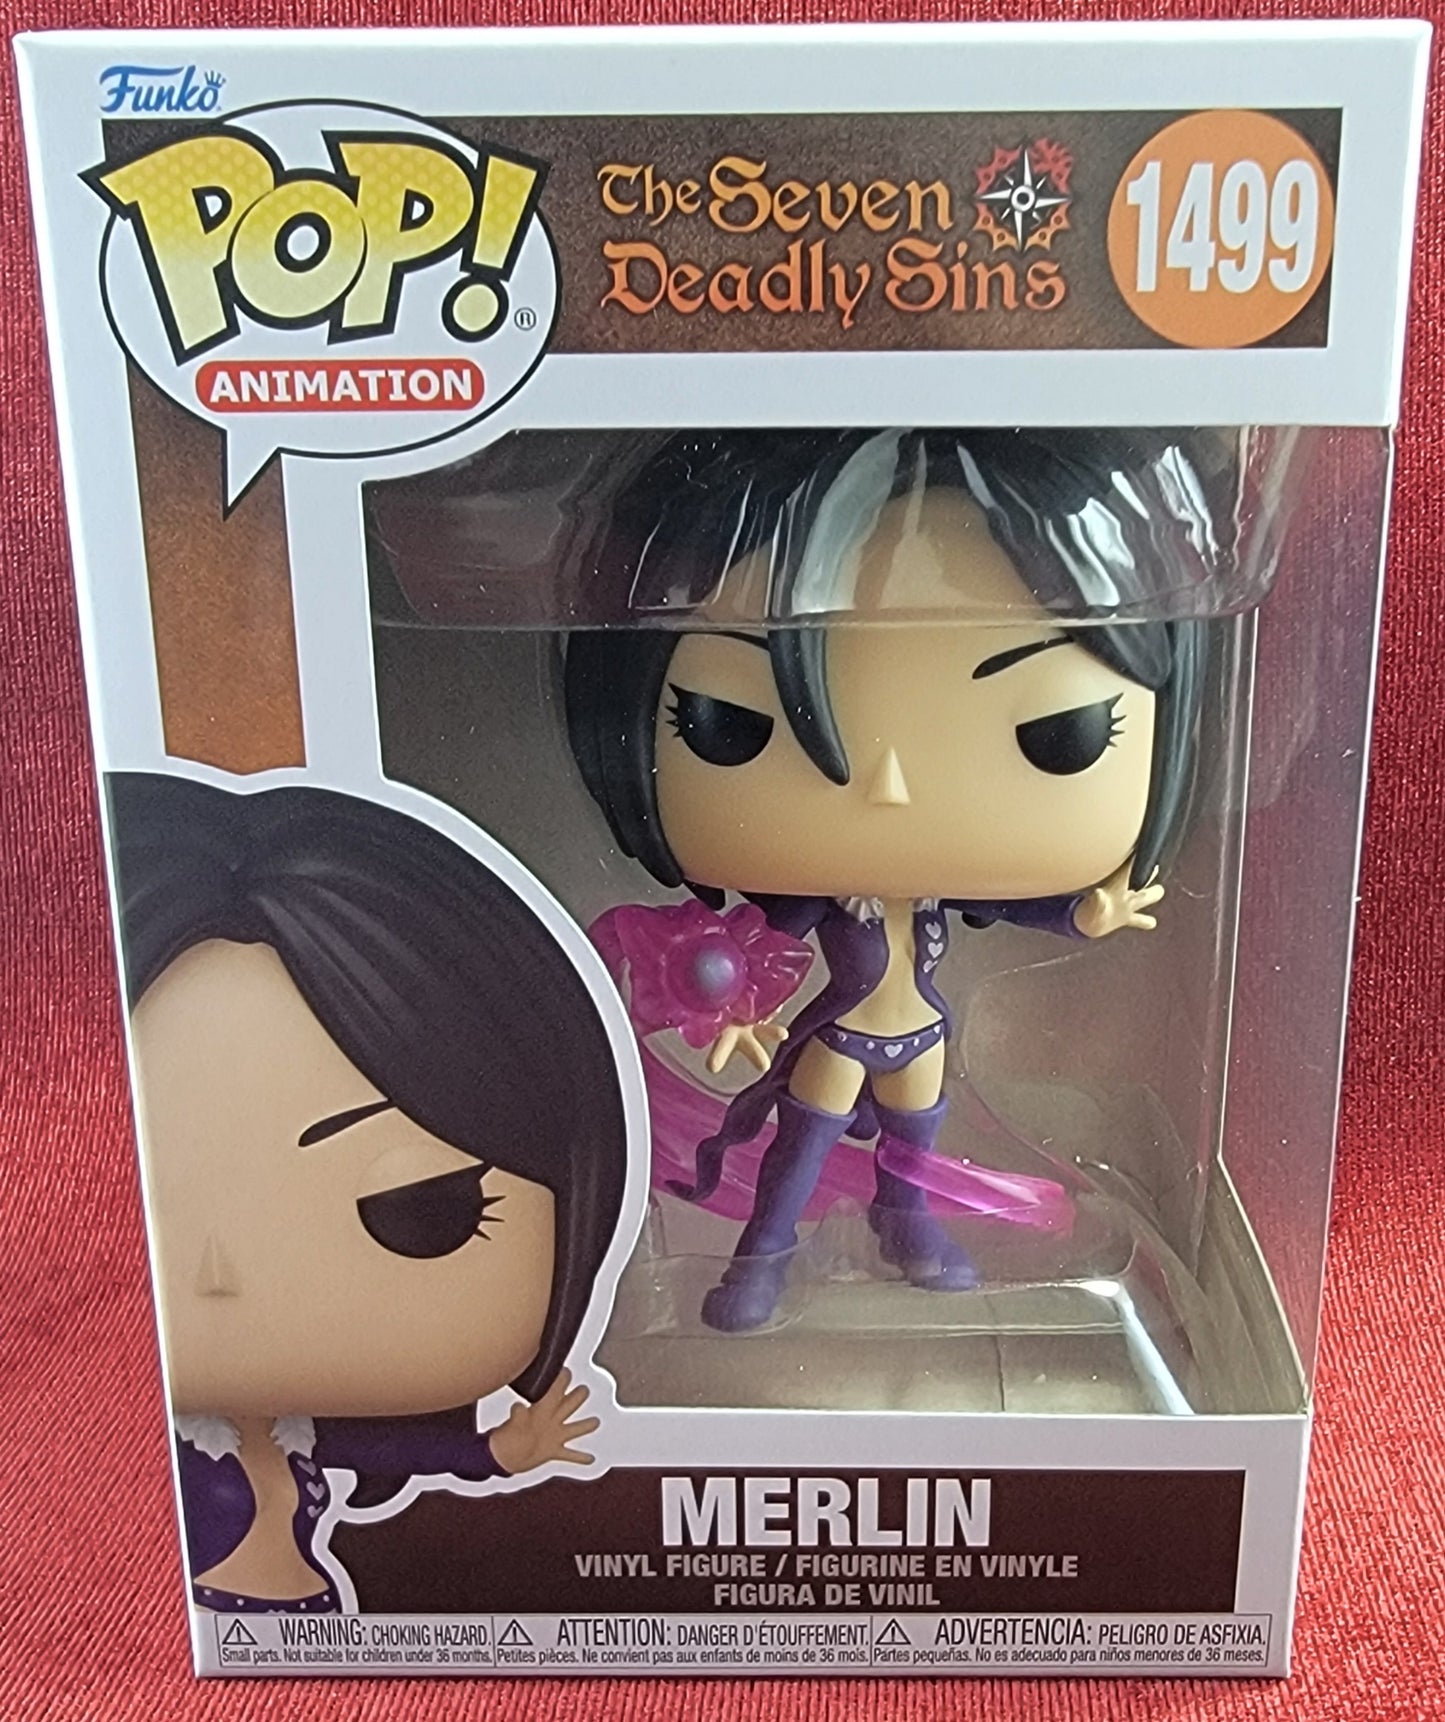 Merlin funko # 1499 (nib)
With pop protector